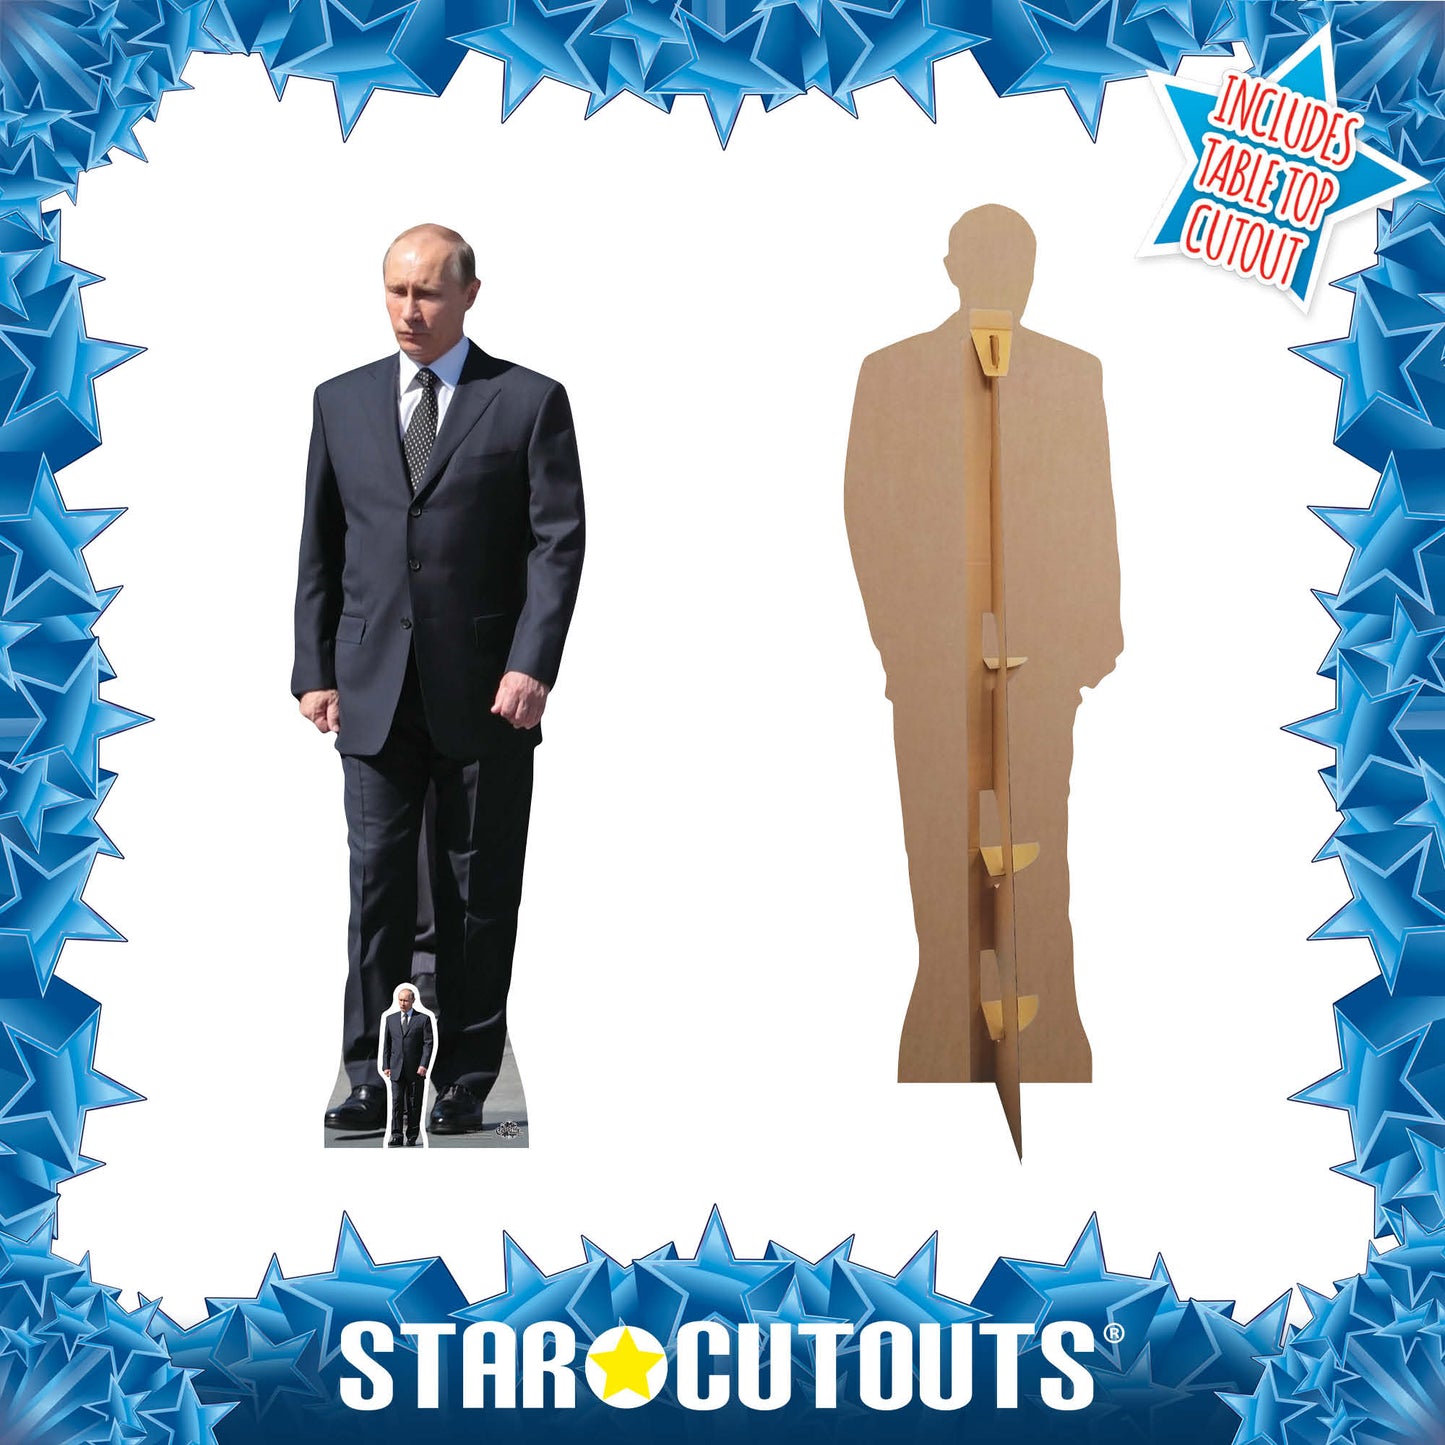 Vladimir Putin Cardboard Cutout Politician